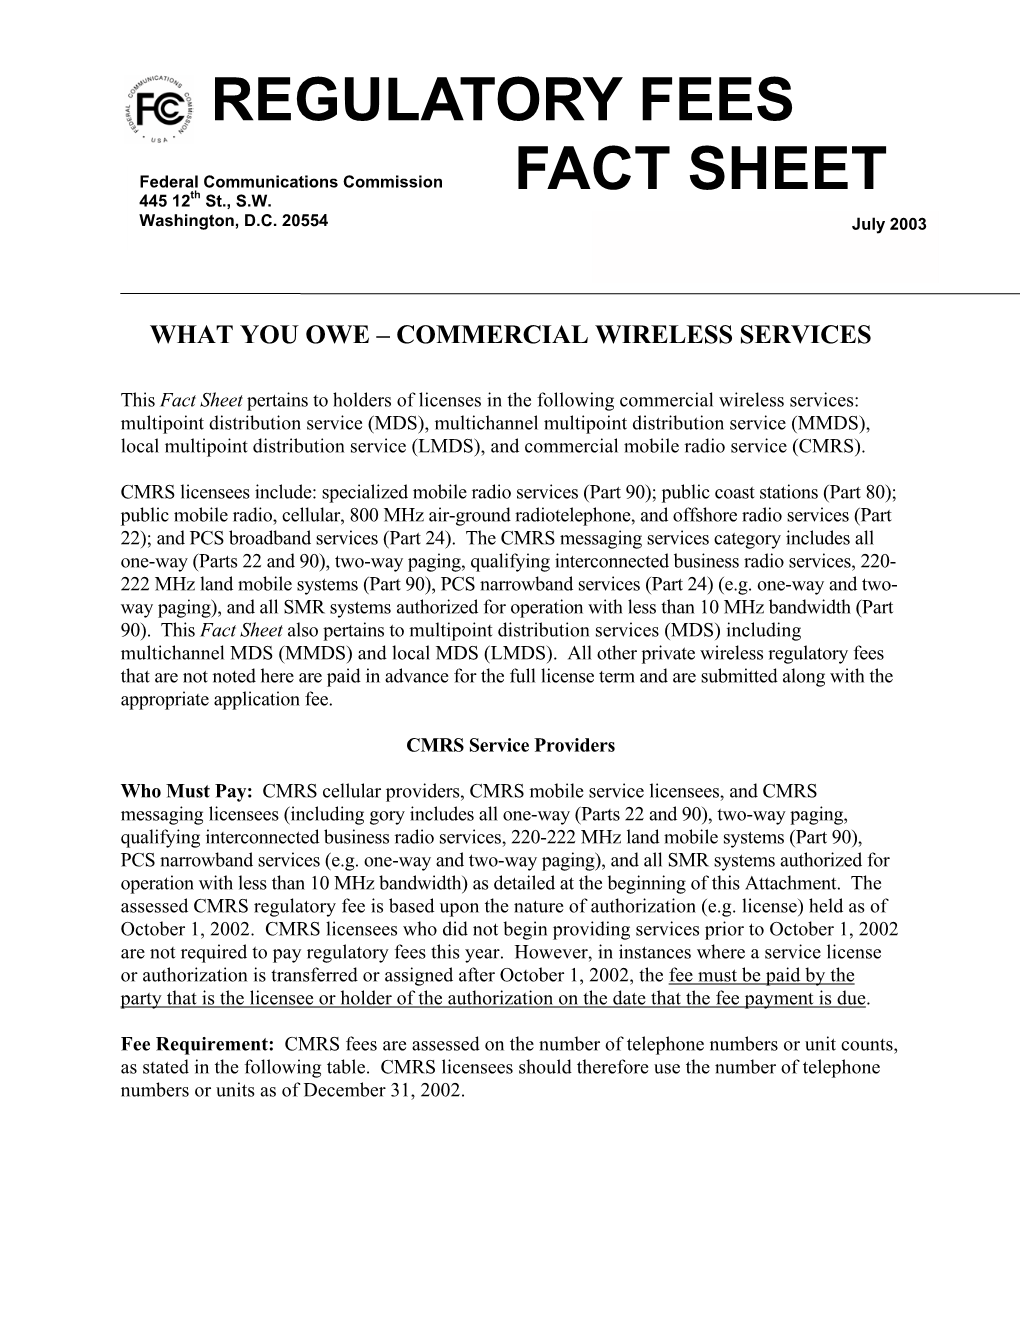 Regulatory Fees Fact Sheet